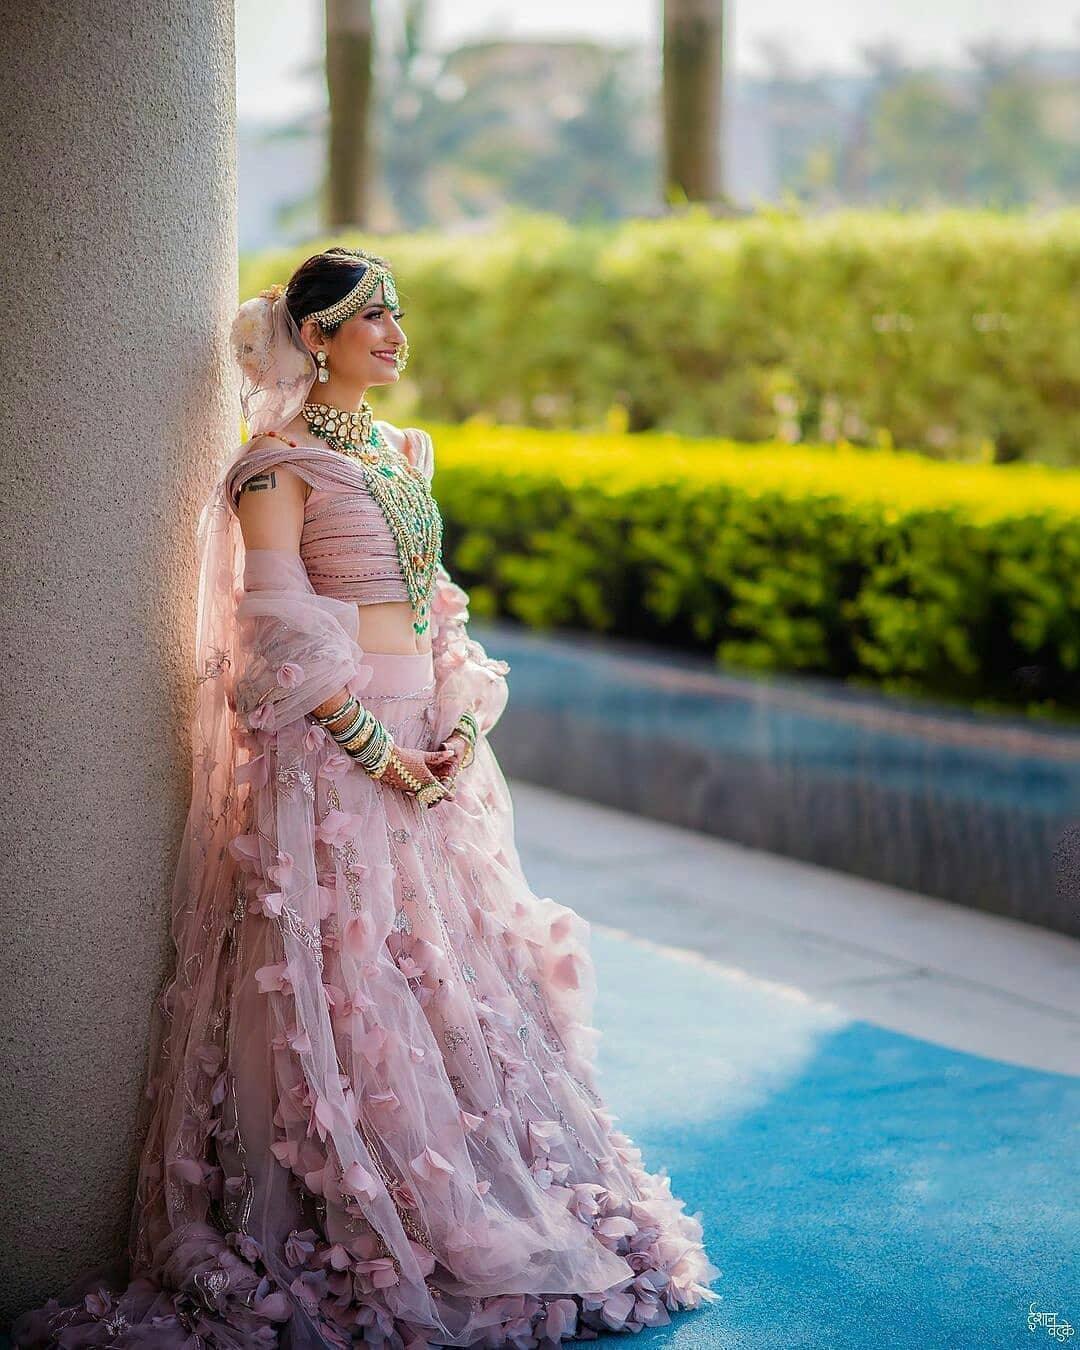 Bride in Pink Wedding Dress and Tiara · Free Stock Photo